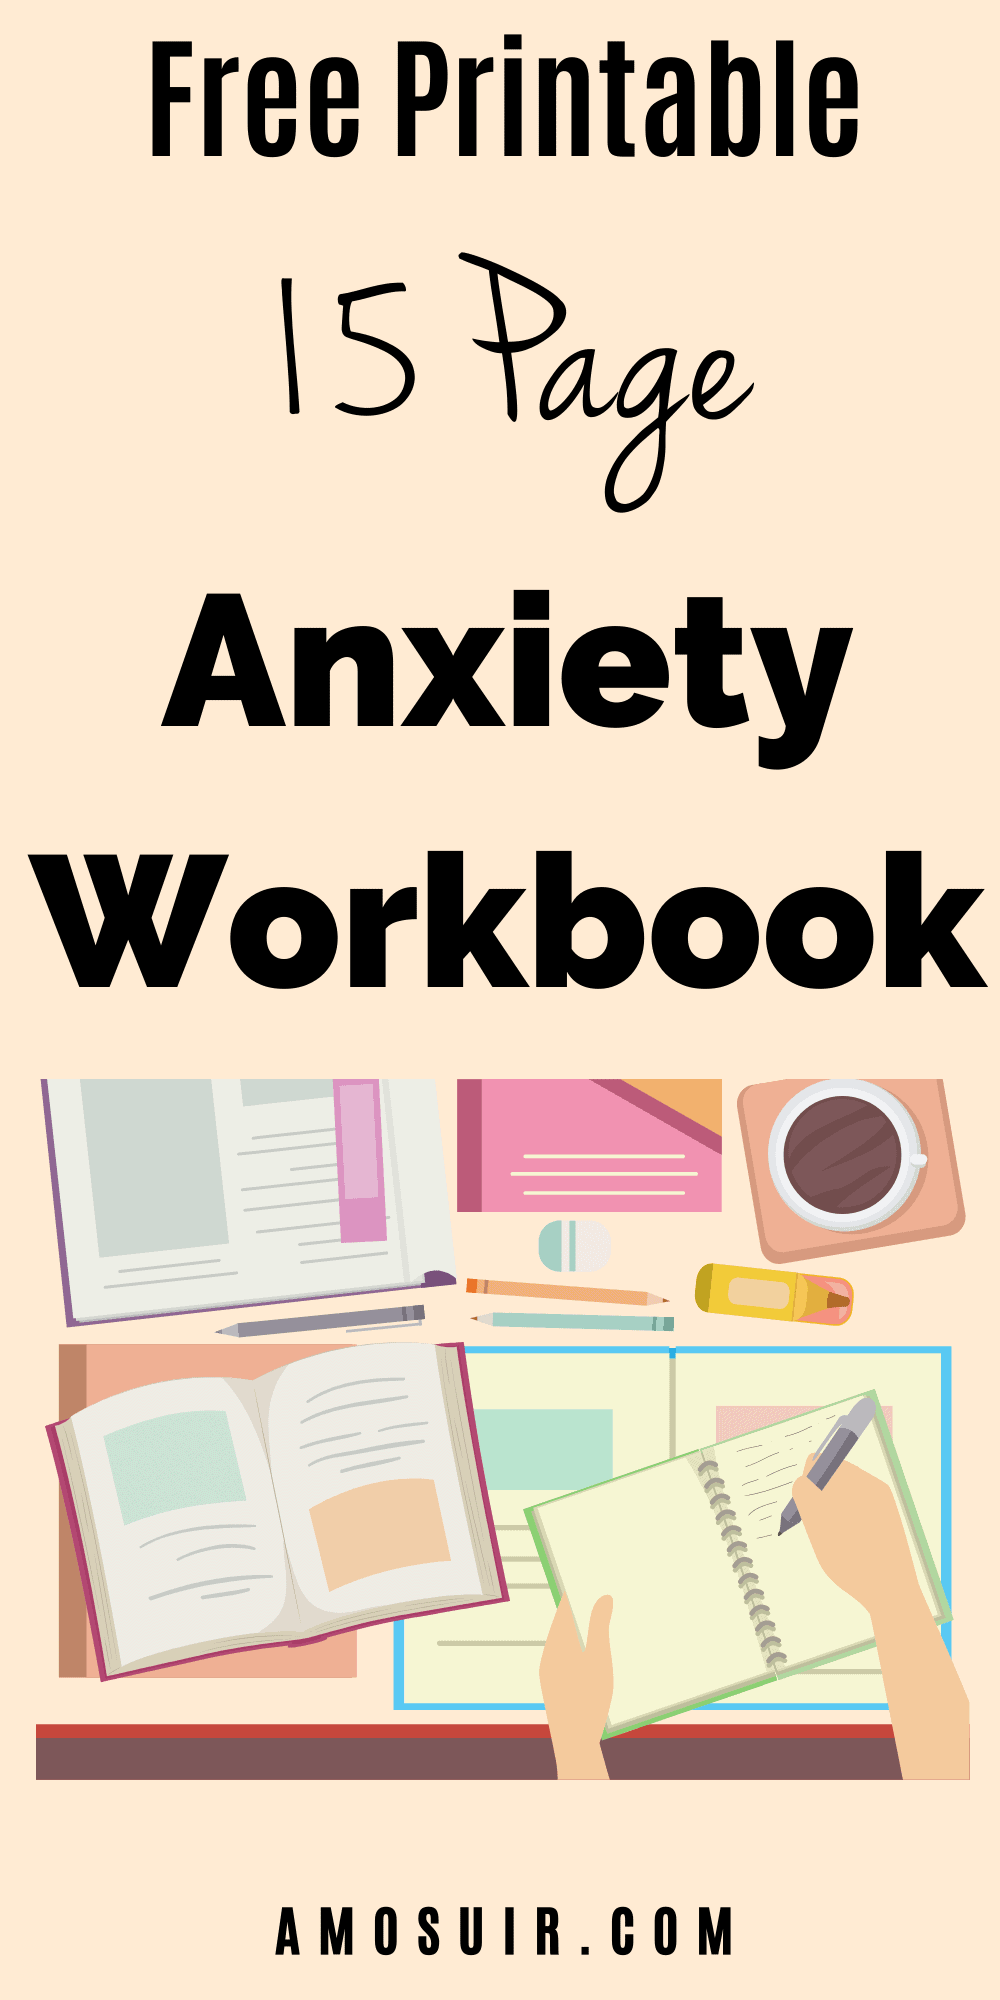 download-your-free-printable-anti-anxiety-workbook-pdf-amosuir